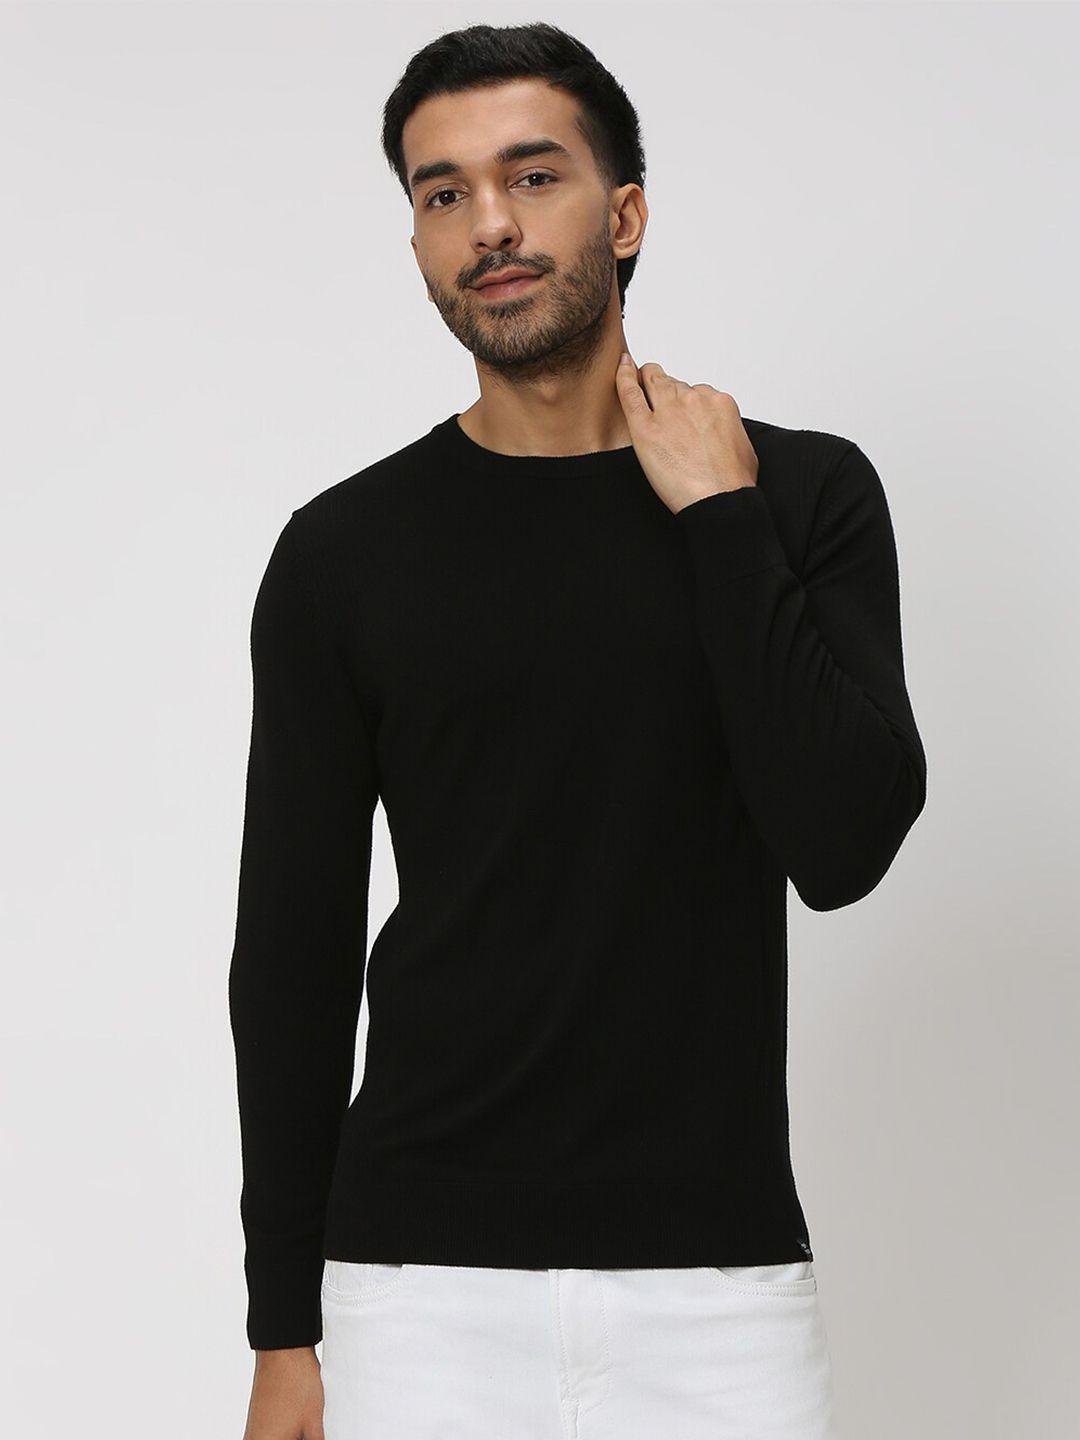 mufti slim fit self designed long sleeves flat knit t-shirt